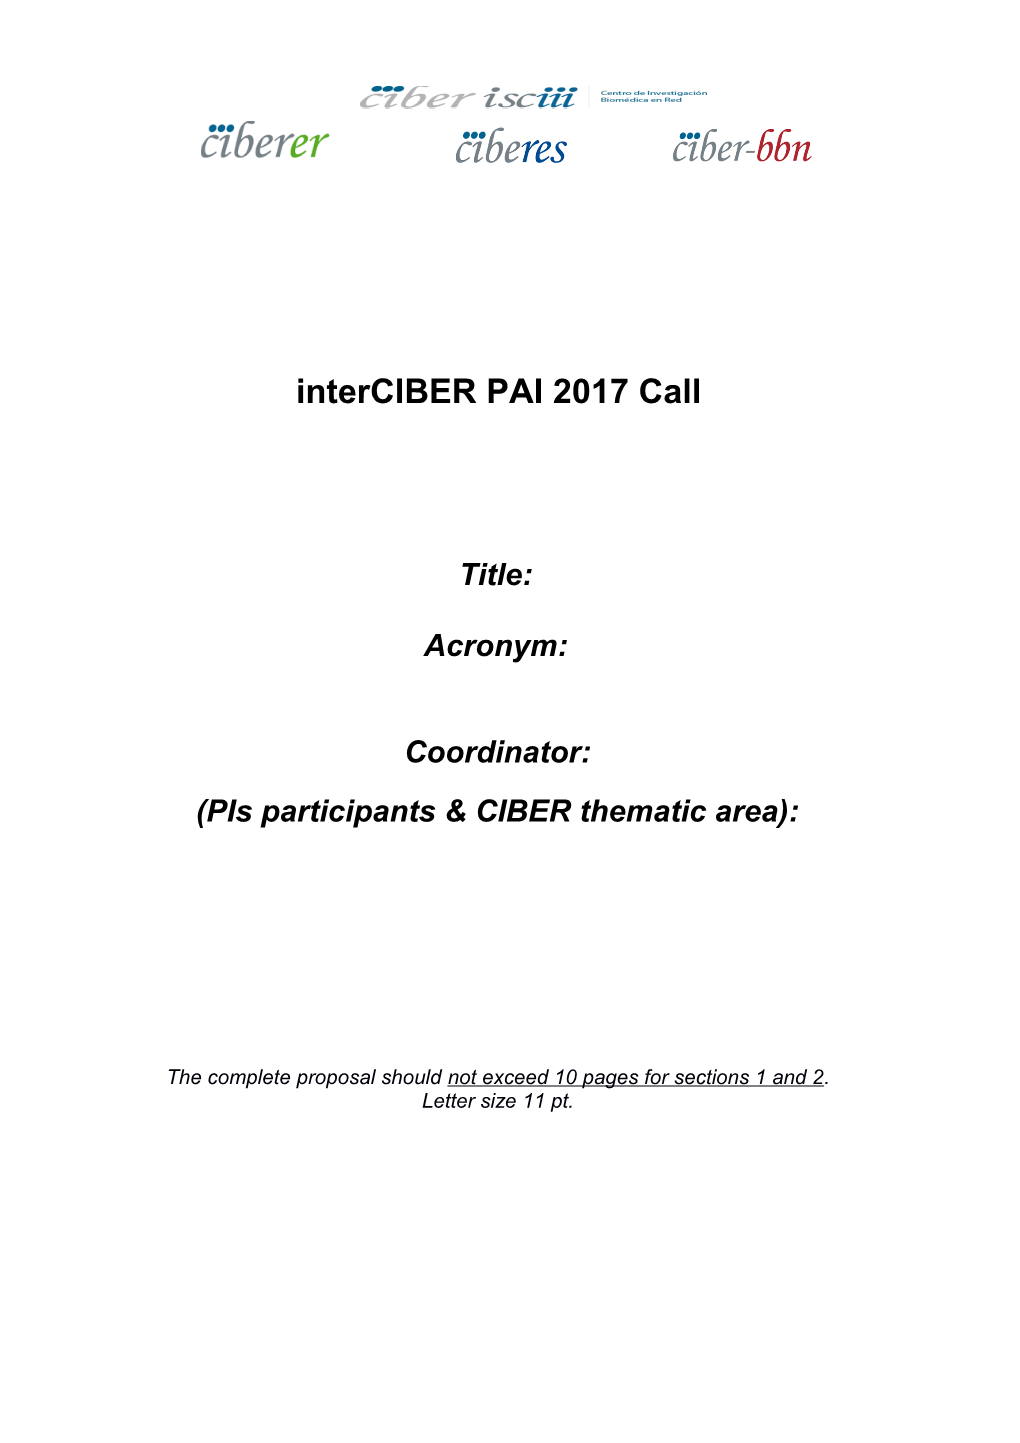 Pis Participants & CIBER Thematic Area